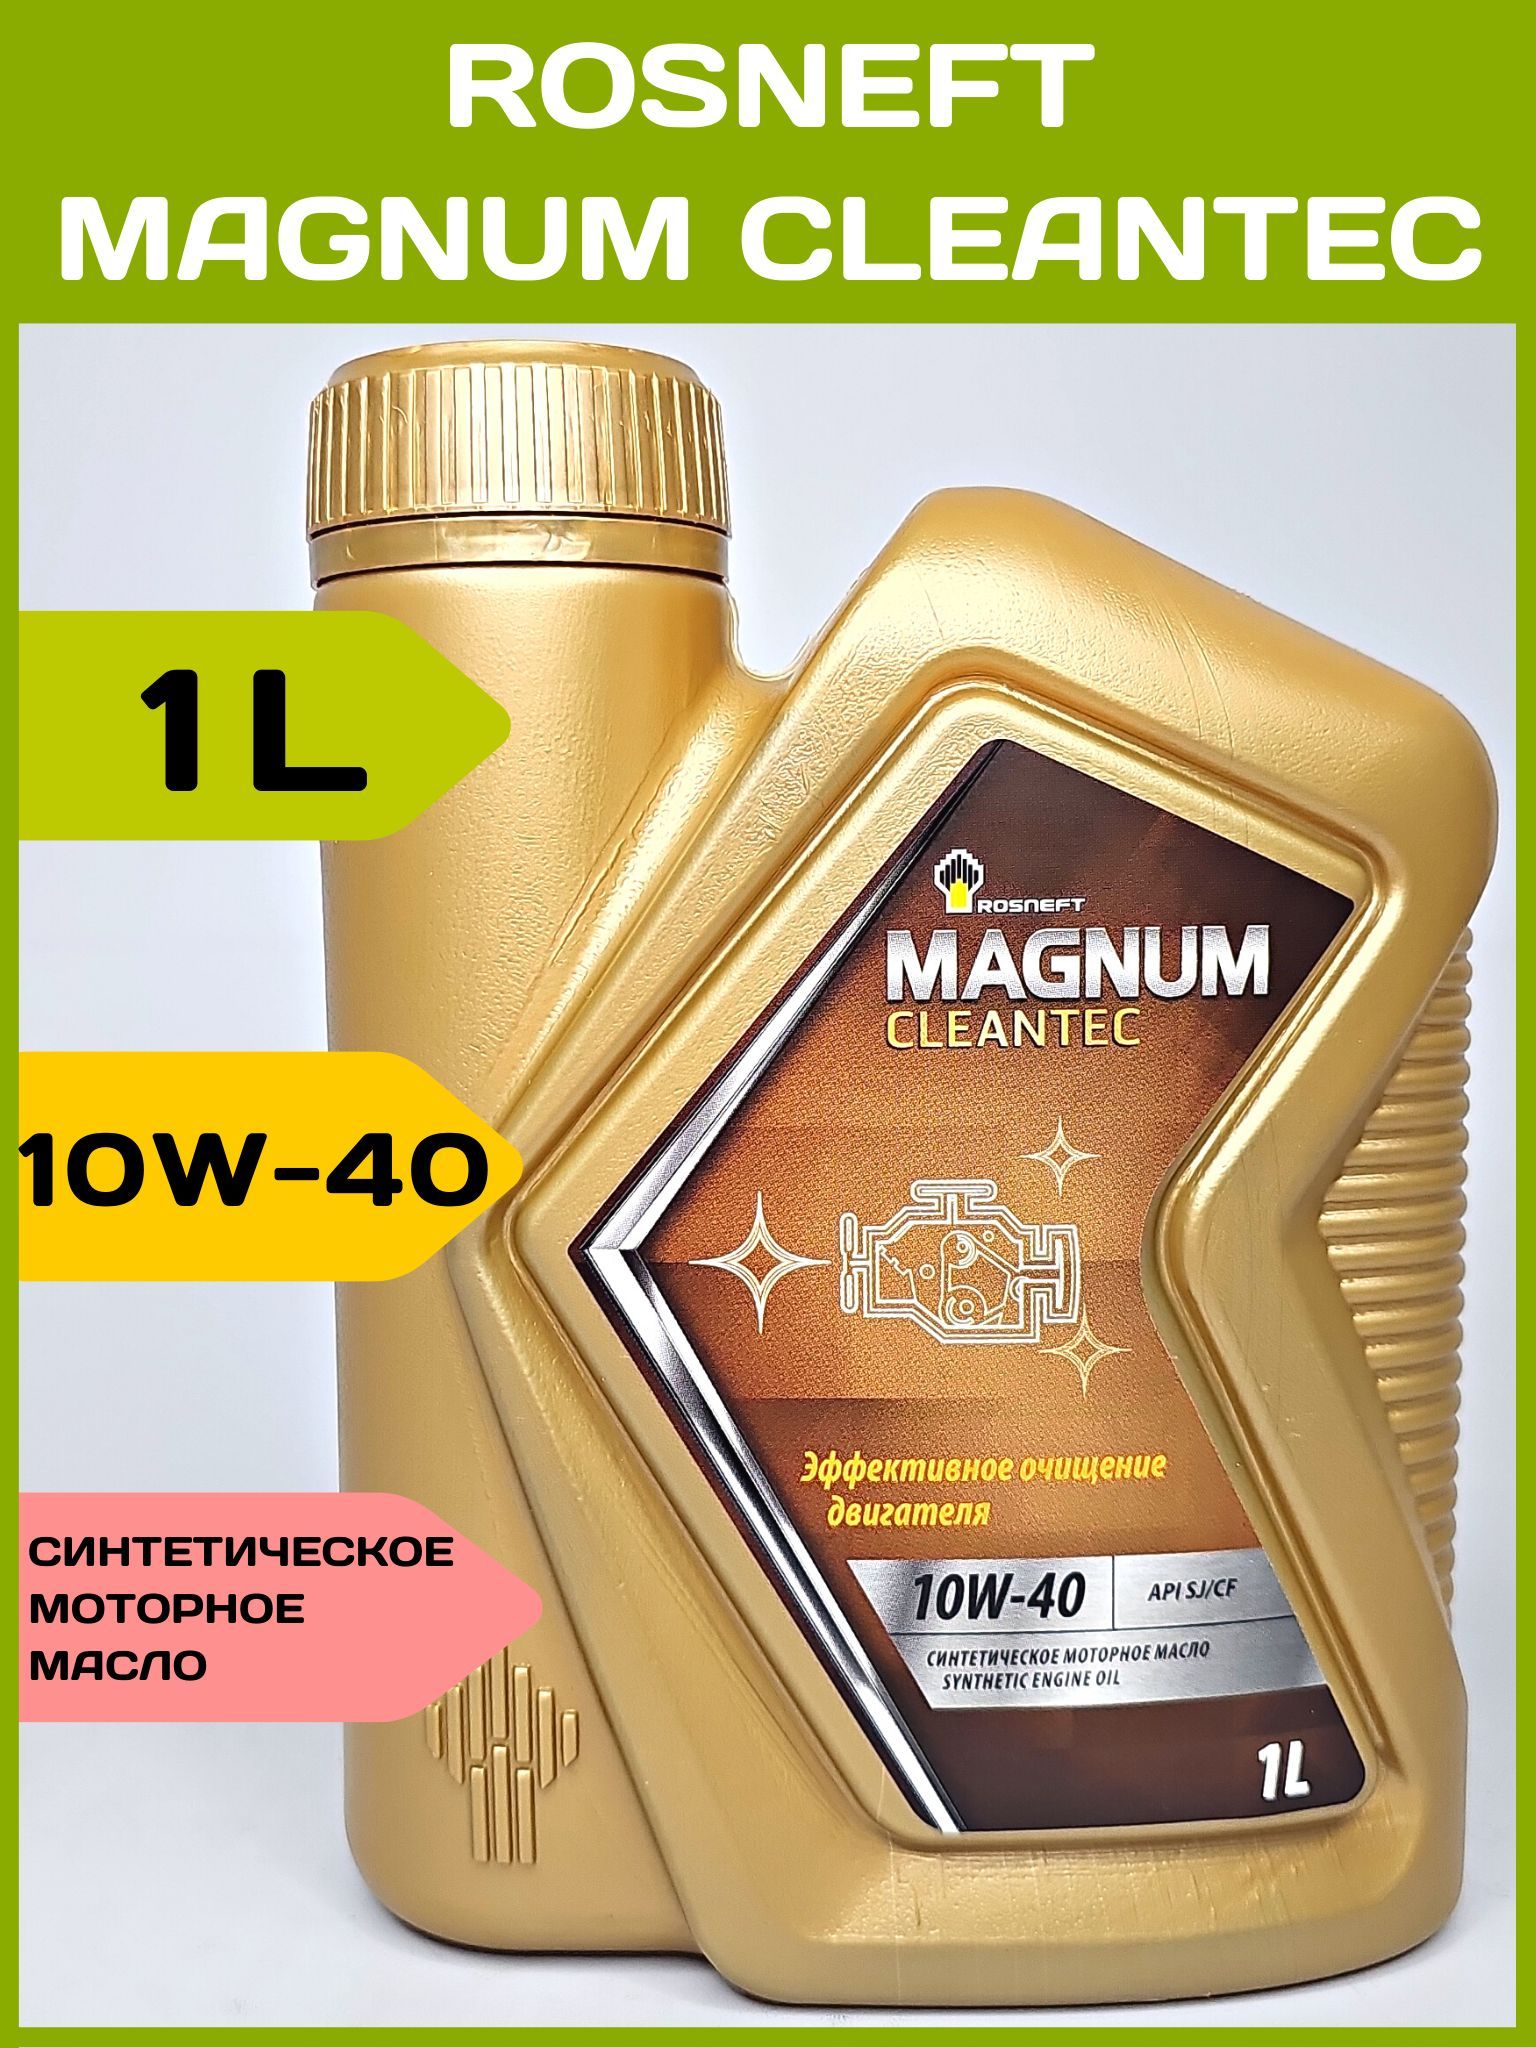 Масло роснефть магнум 10w 40 полусинтетика. Роснефть Магнум 10w 40. Роснефть Magnum CLEANTEC 10w-40. Rosneft Magnum Maxtec 10w-40. Роснефть Магнум реклама.